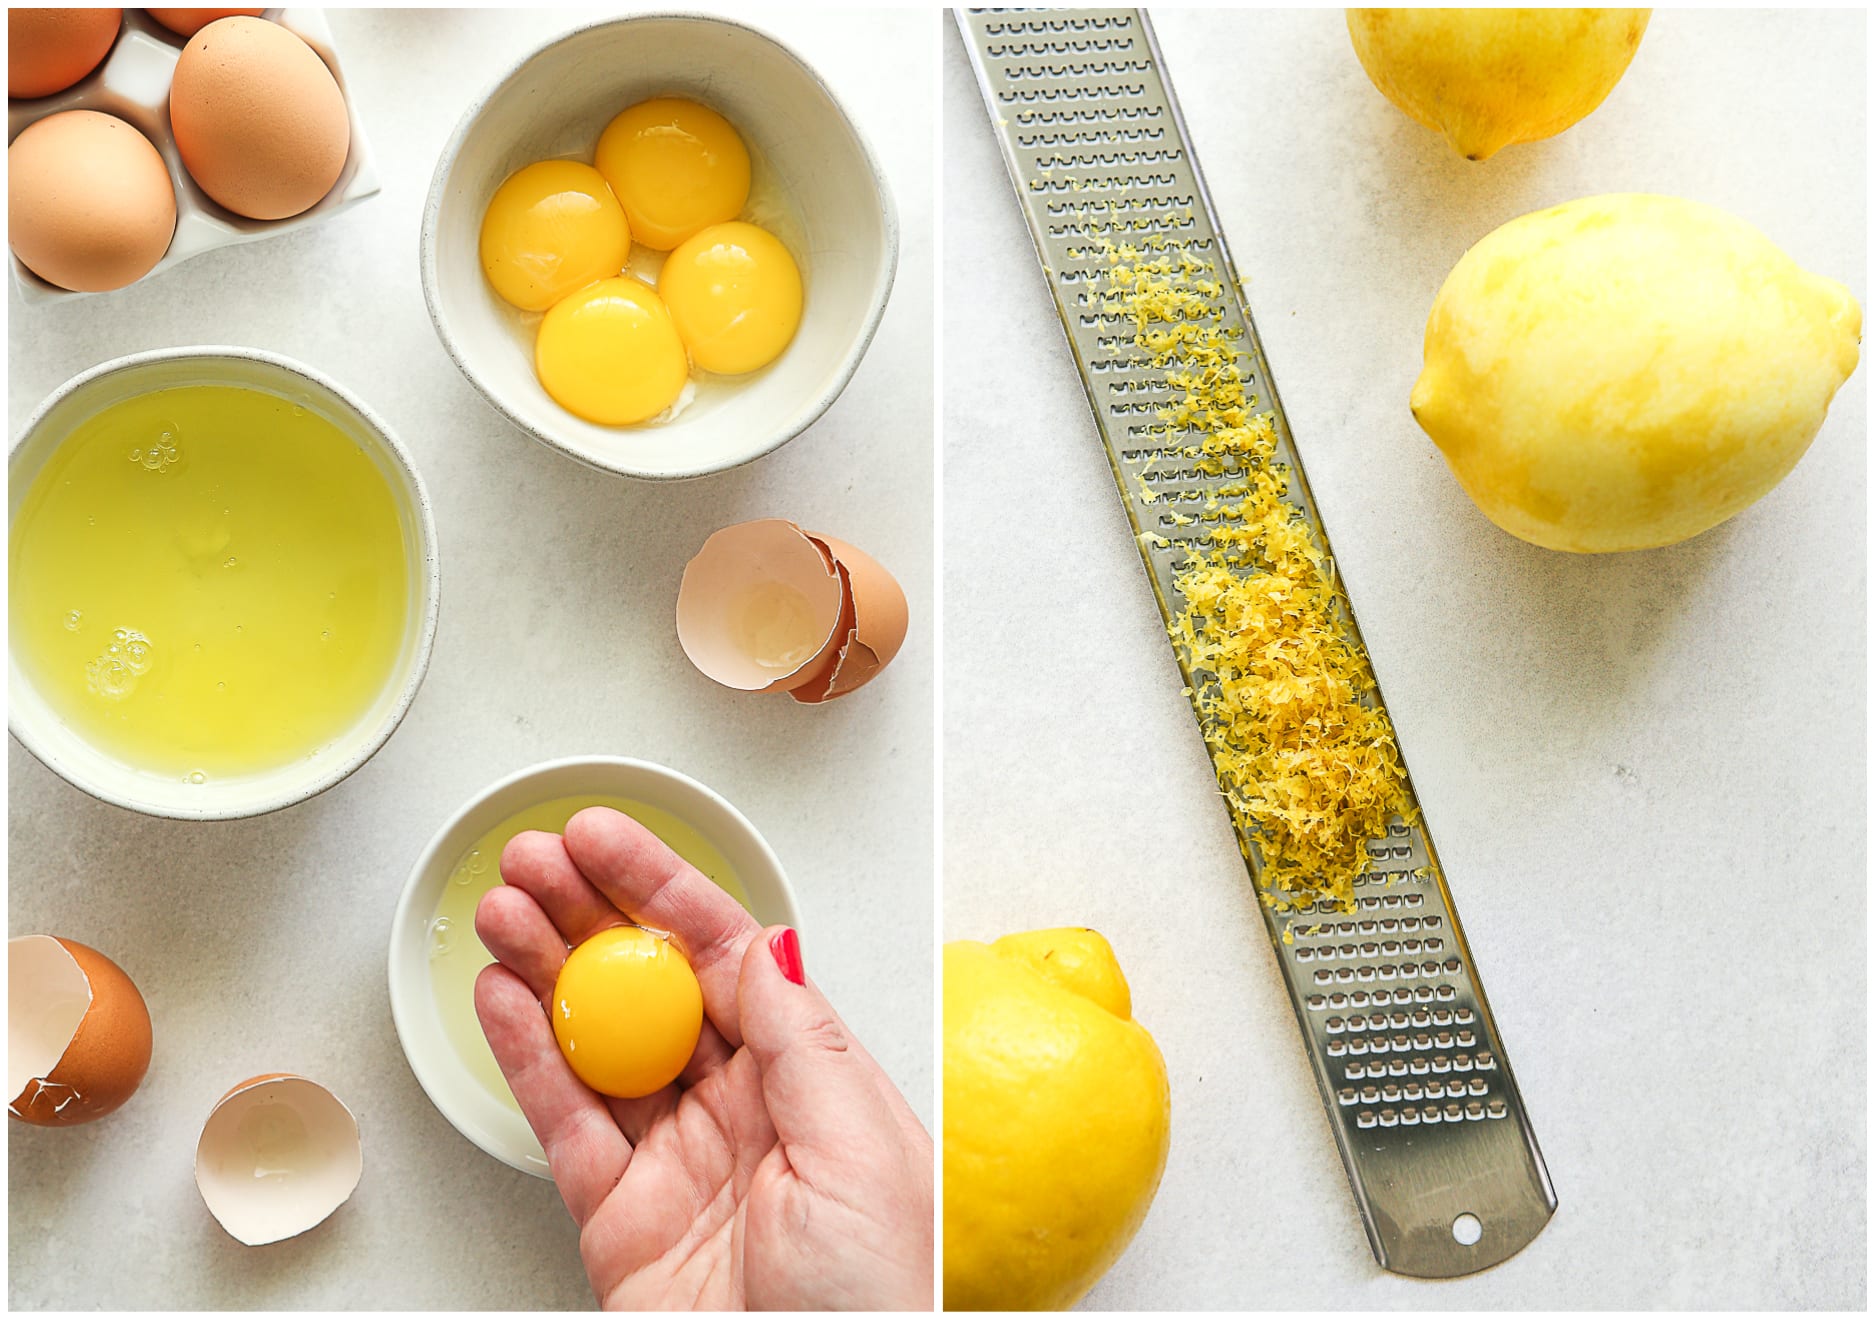 separating eggs and zesting lemons